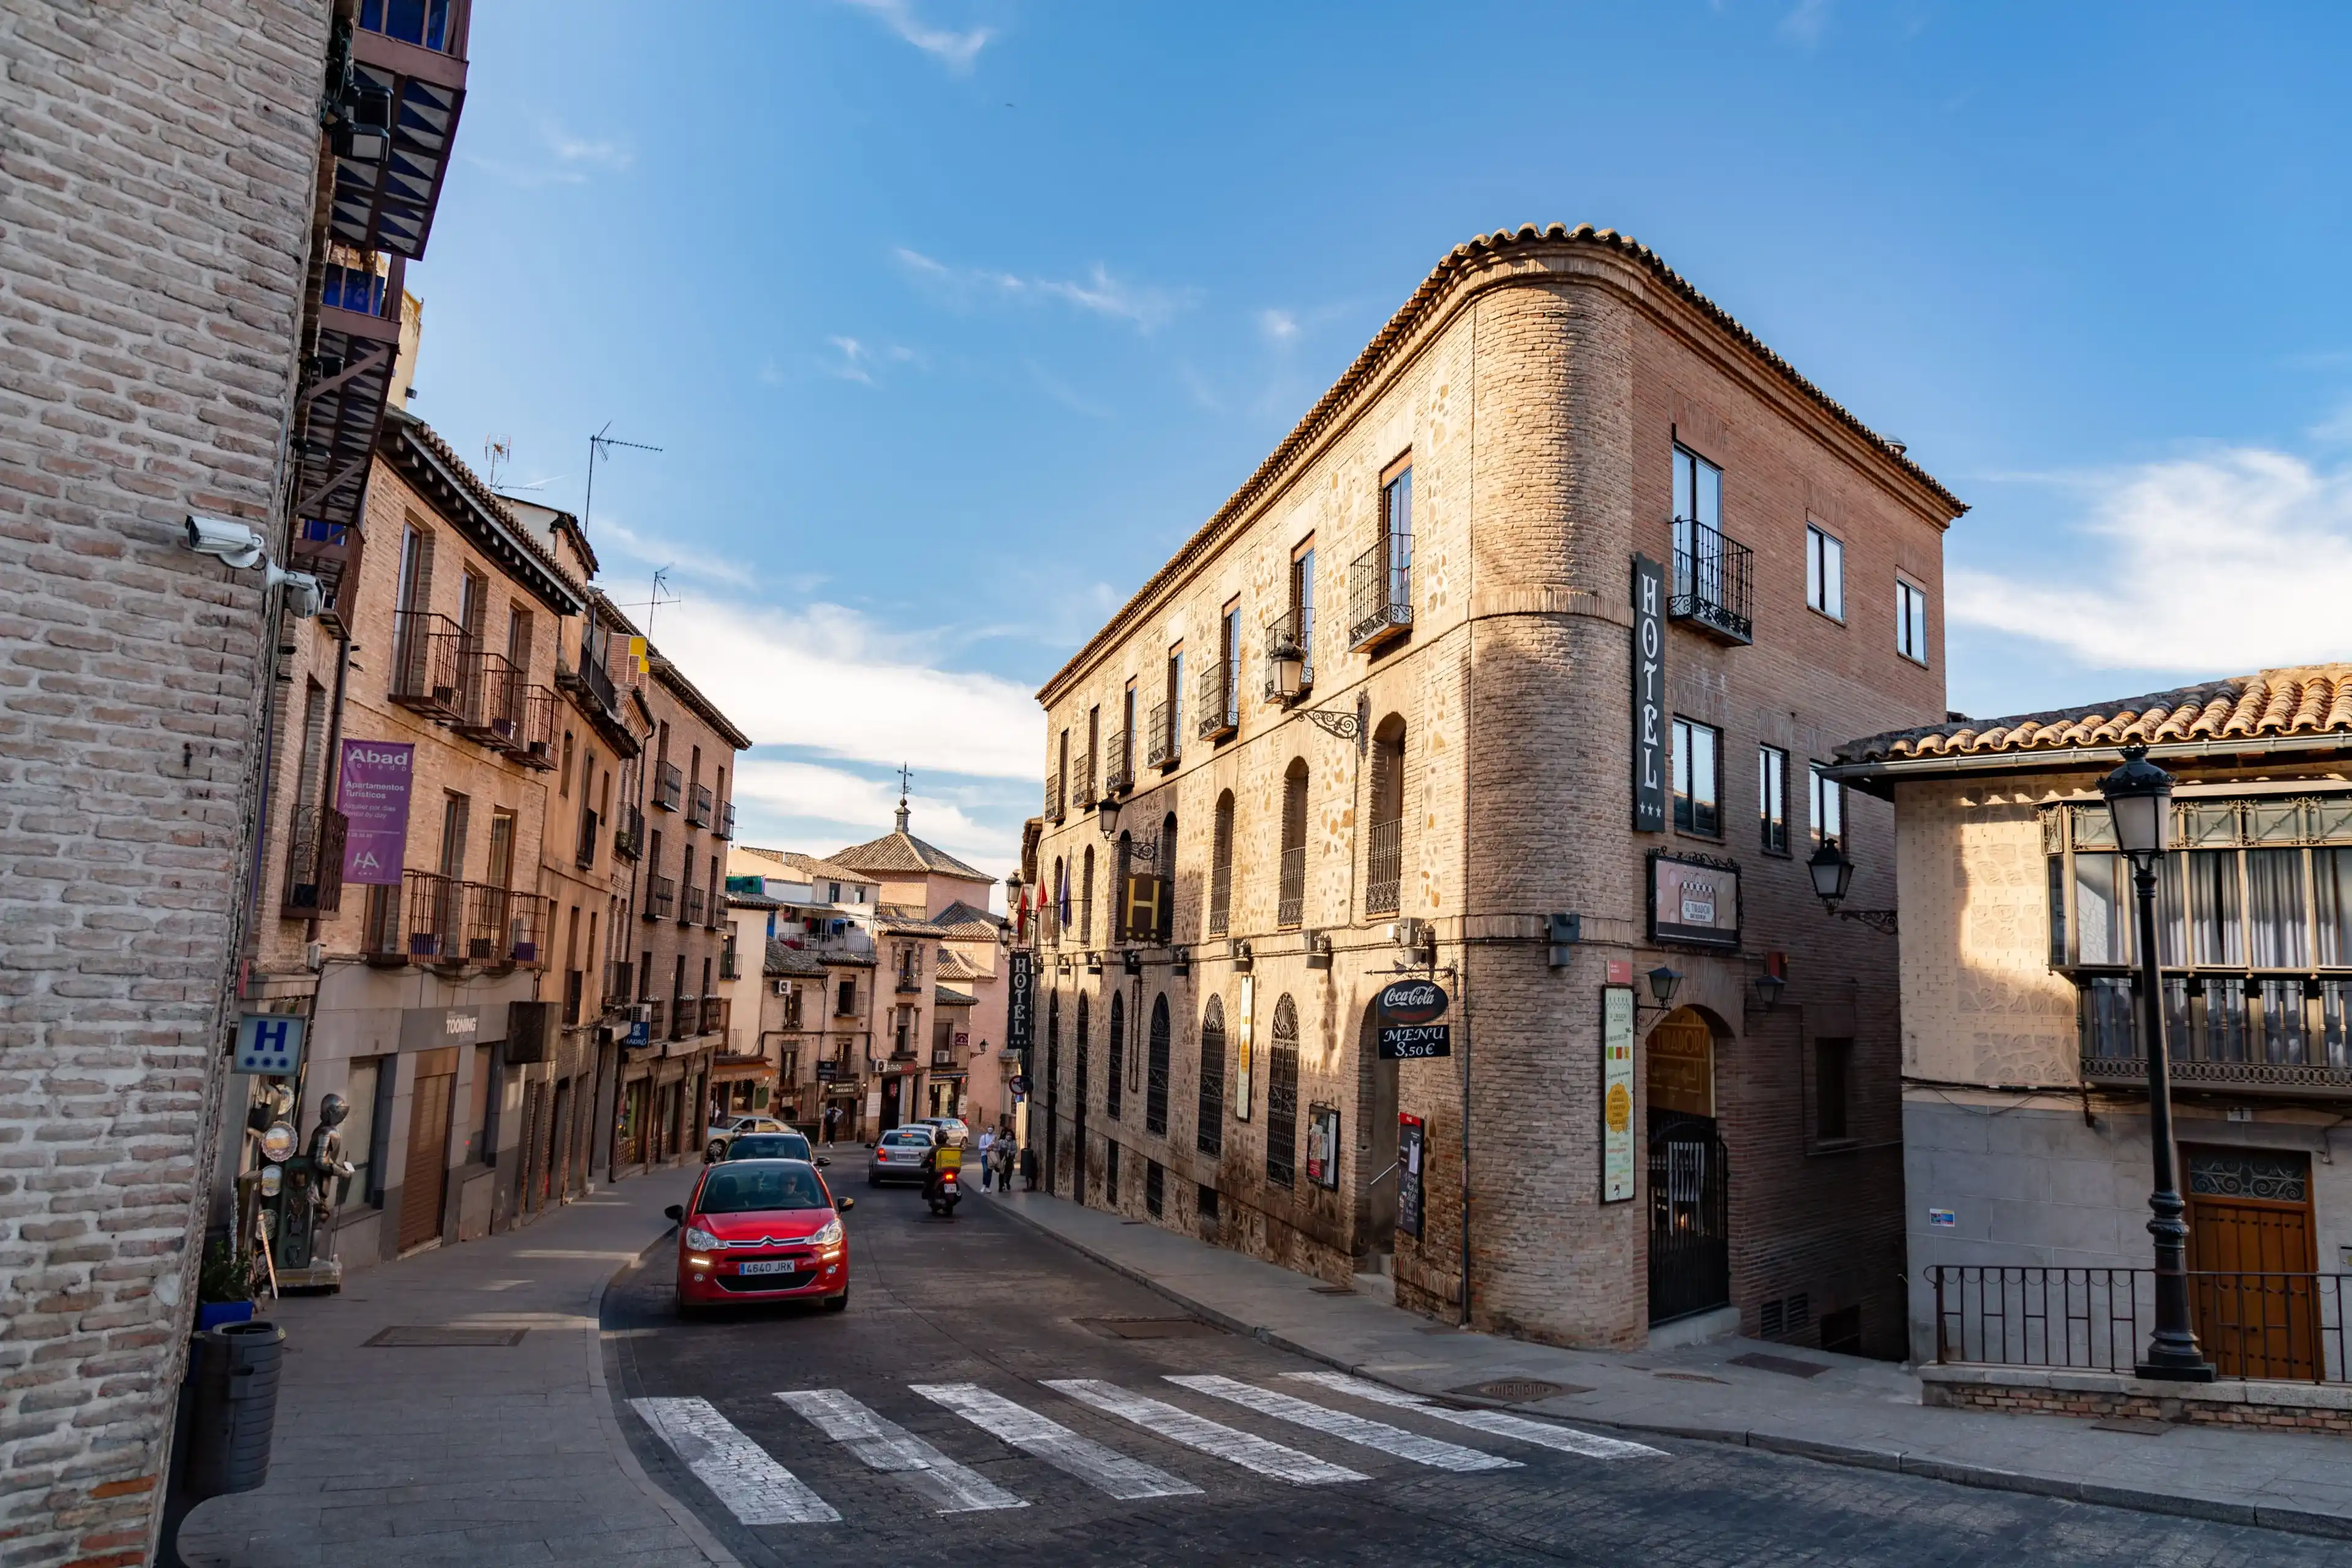 Castile-La Mancha hotels. Best hotels in Castile-La Mancha, Spain